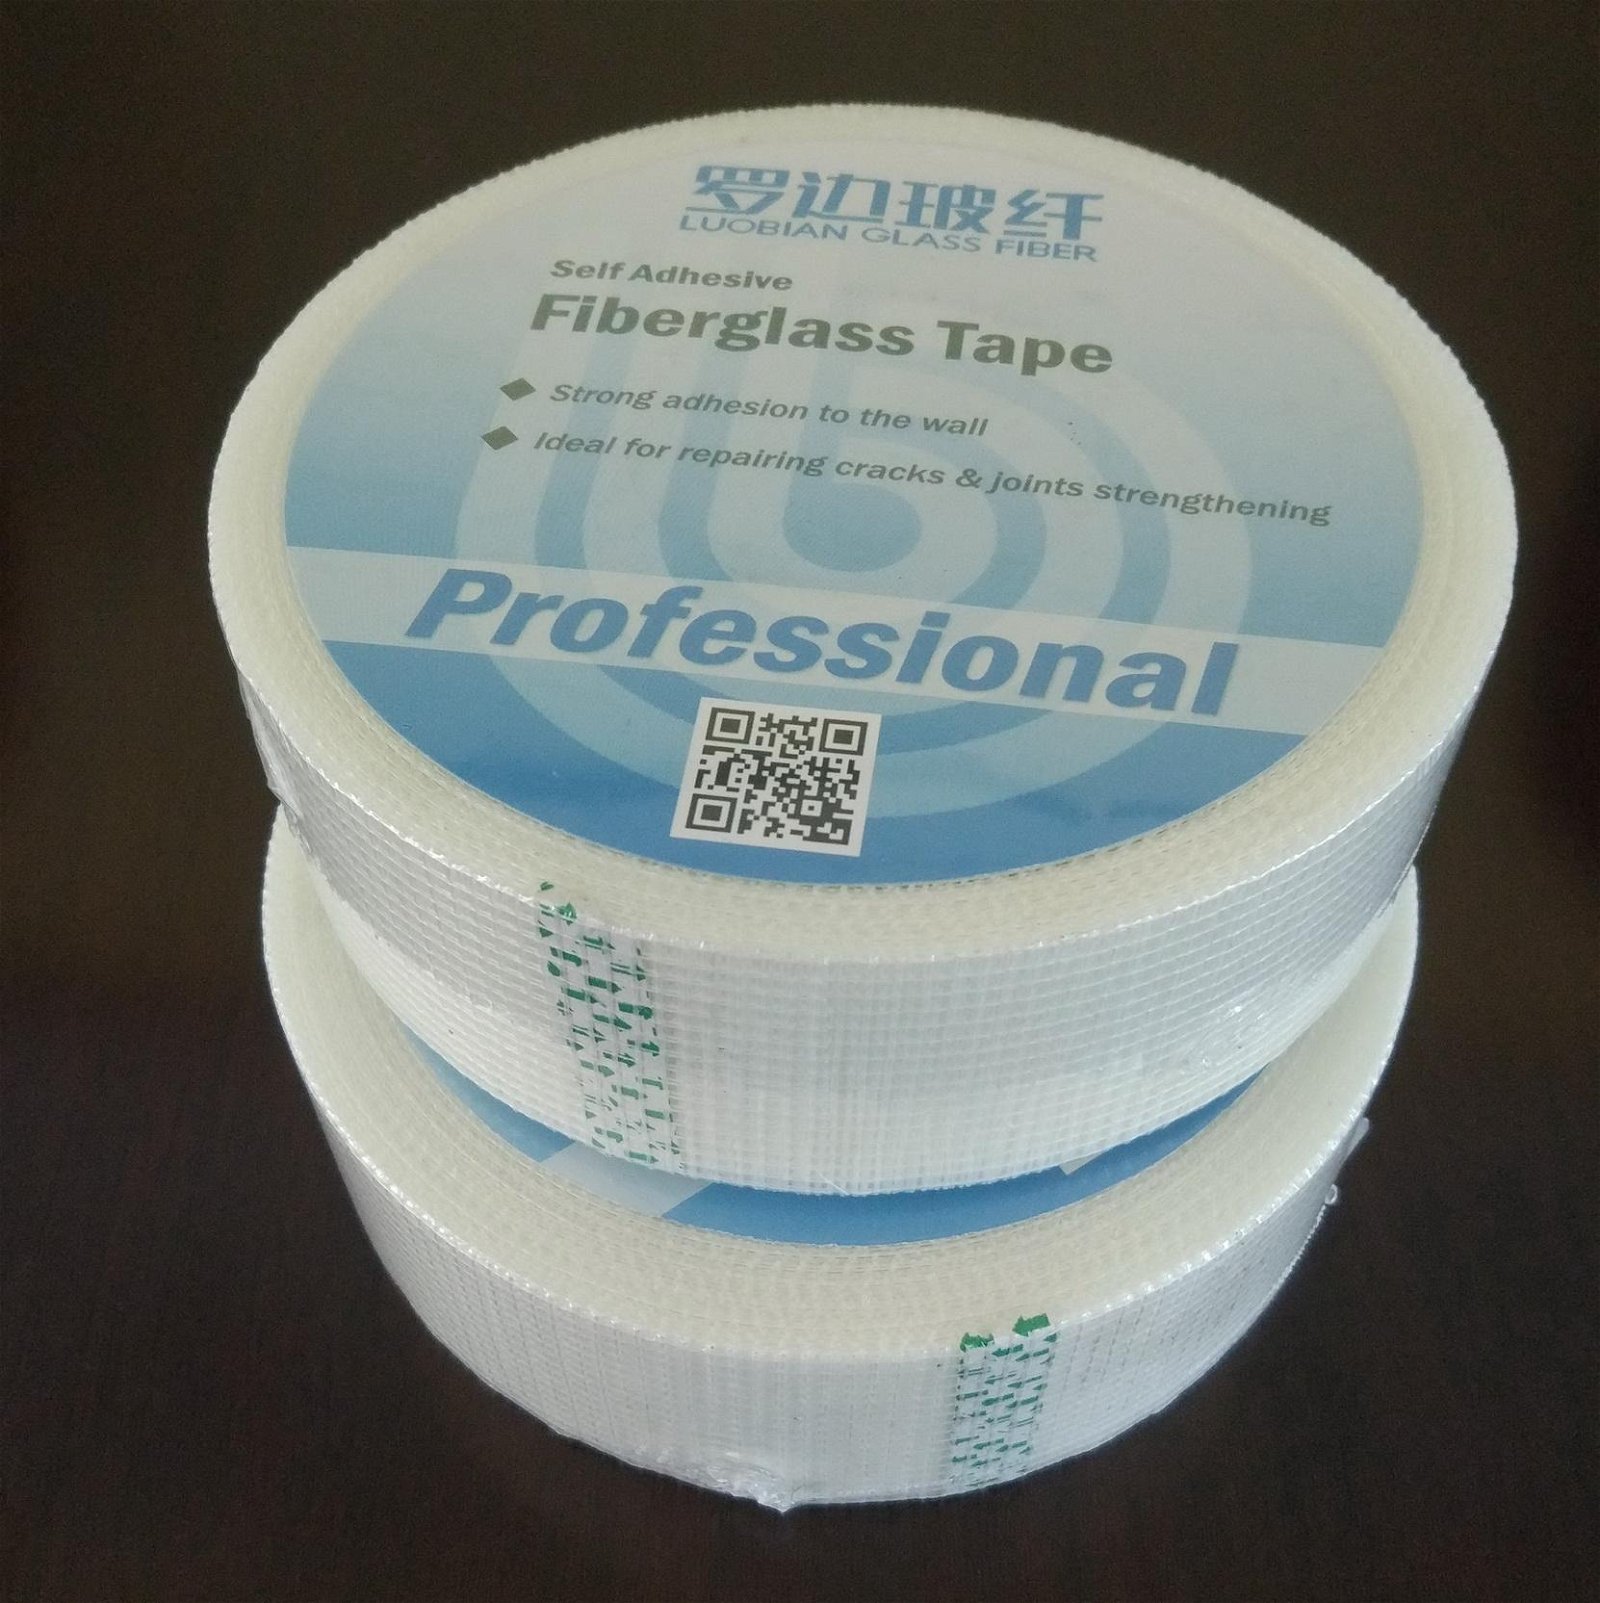  Self Adhesive Fiberglass Tape Super Strong Adhesive Fiberglass Tape 2." X 65"